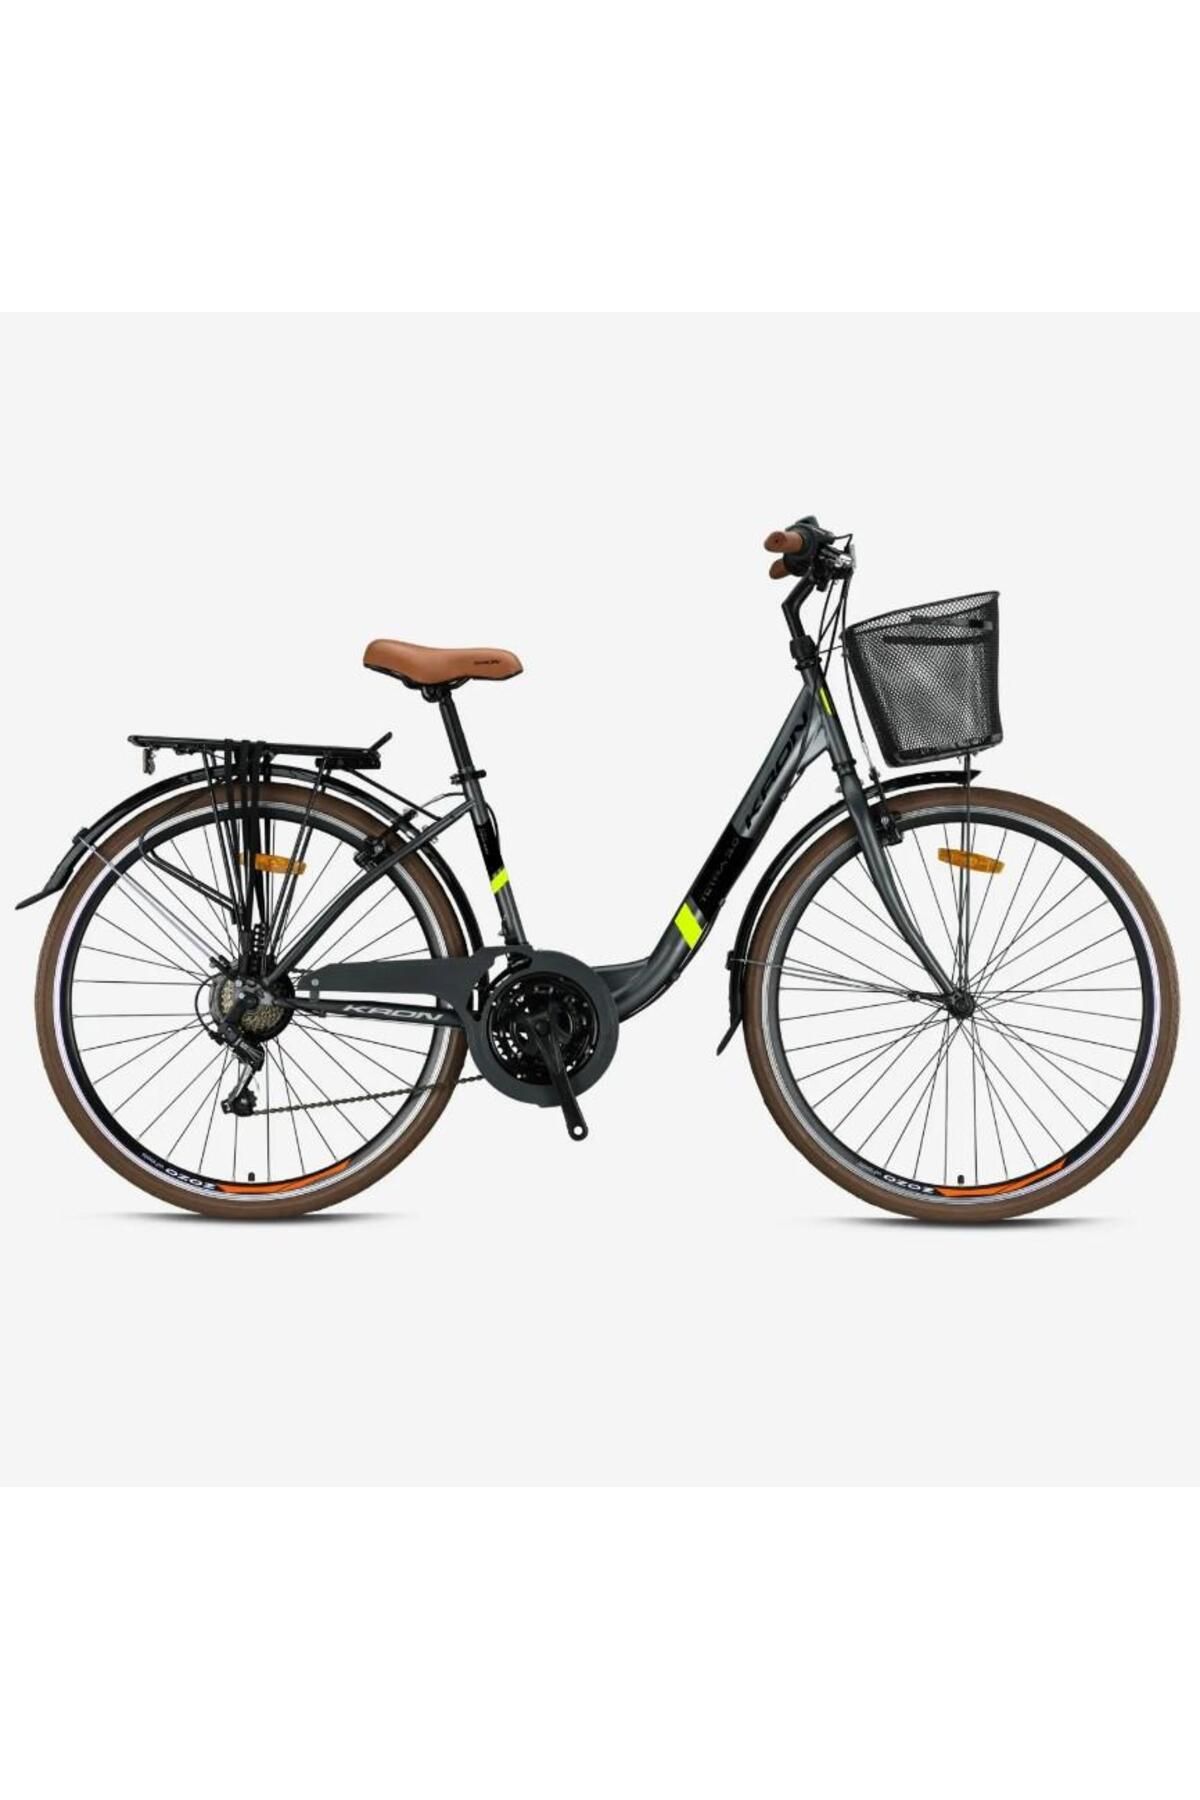 Kron Tetra 3.0 28" Jant Sepetli Şehir Bisikleti 15' Kadro 21 Vites V Fren Füme Siyah Neon Sarı